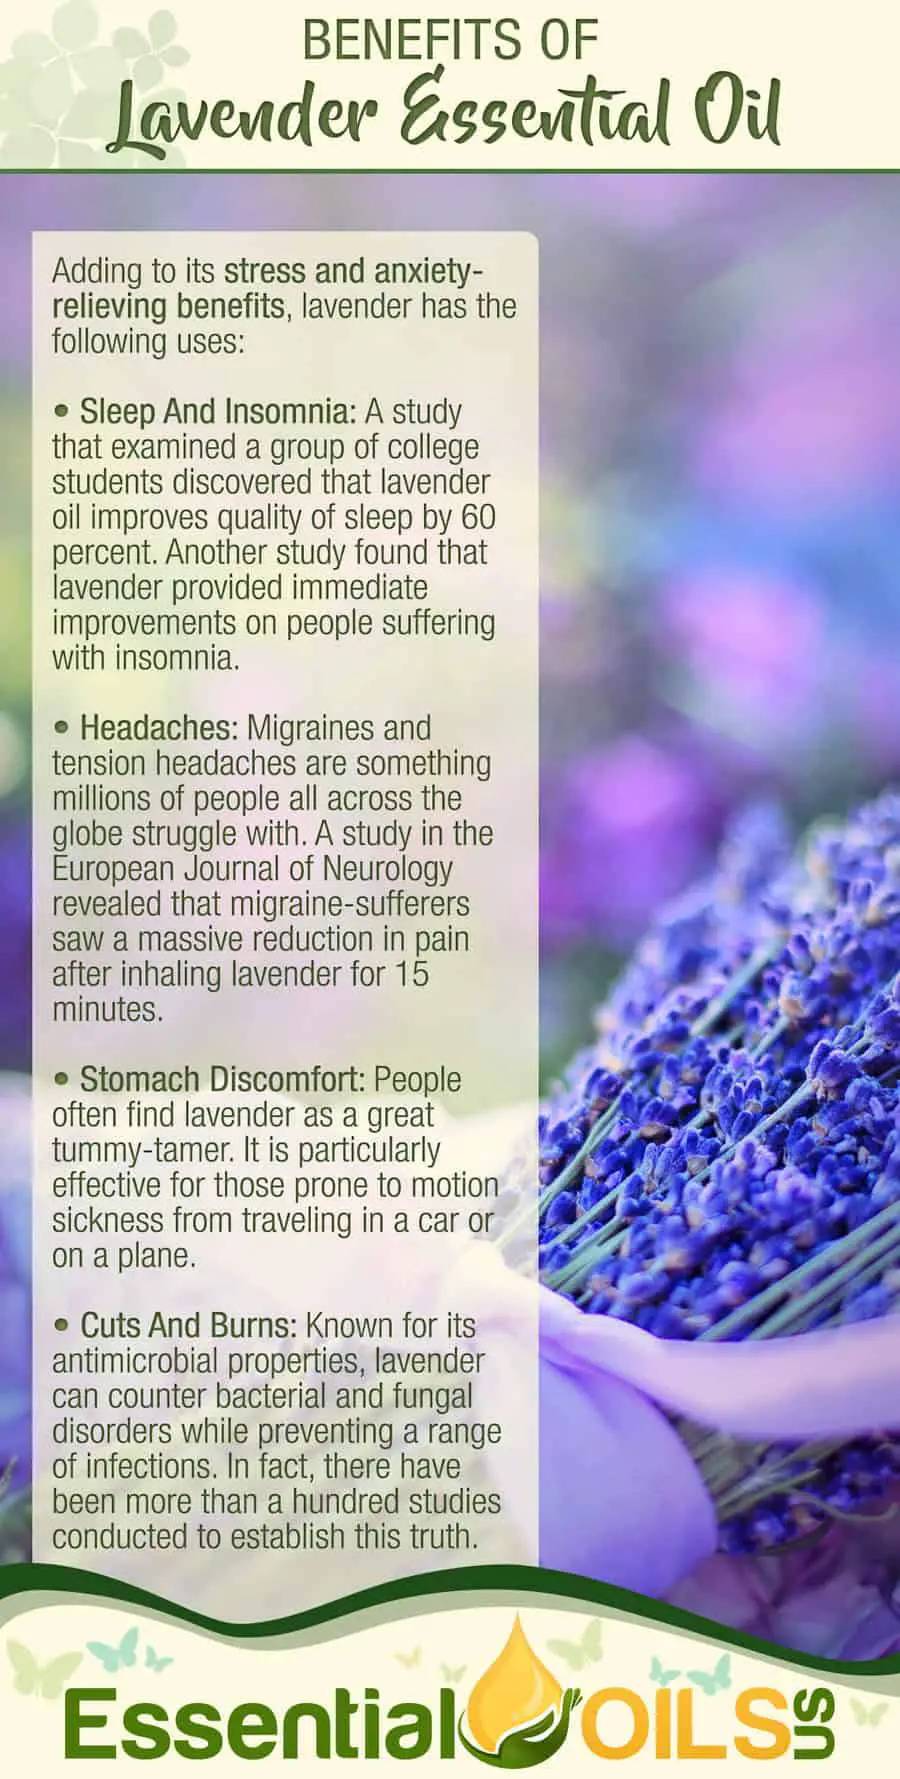 Lavender Essential Oil - Benefits